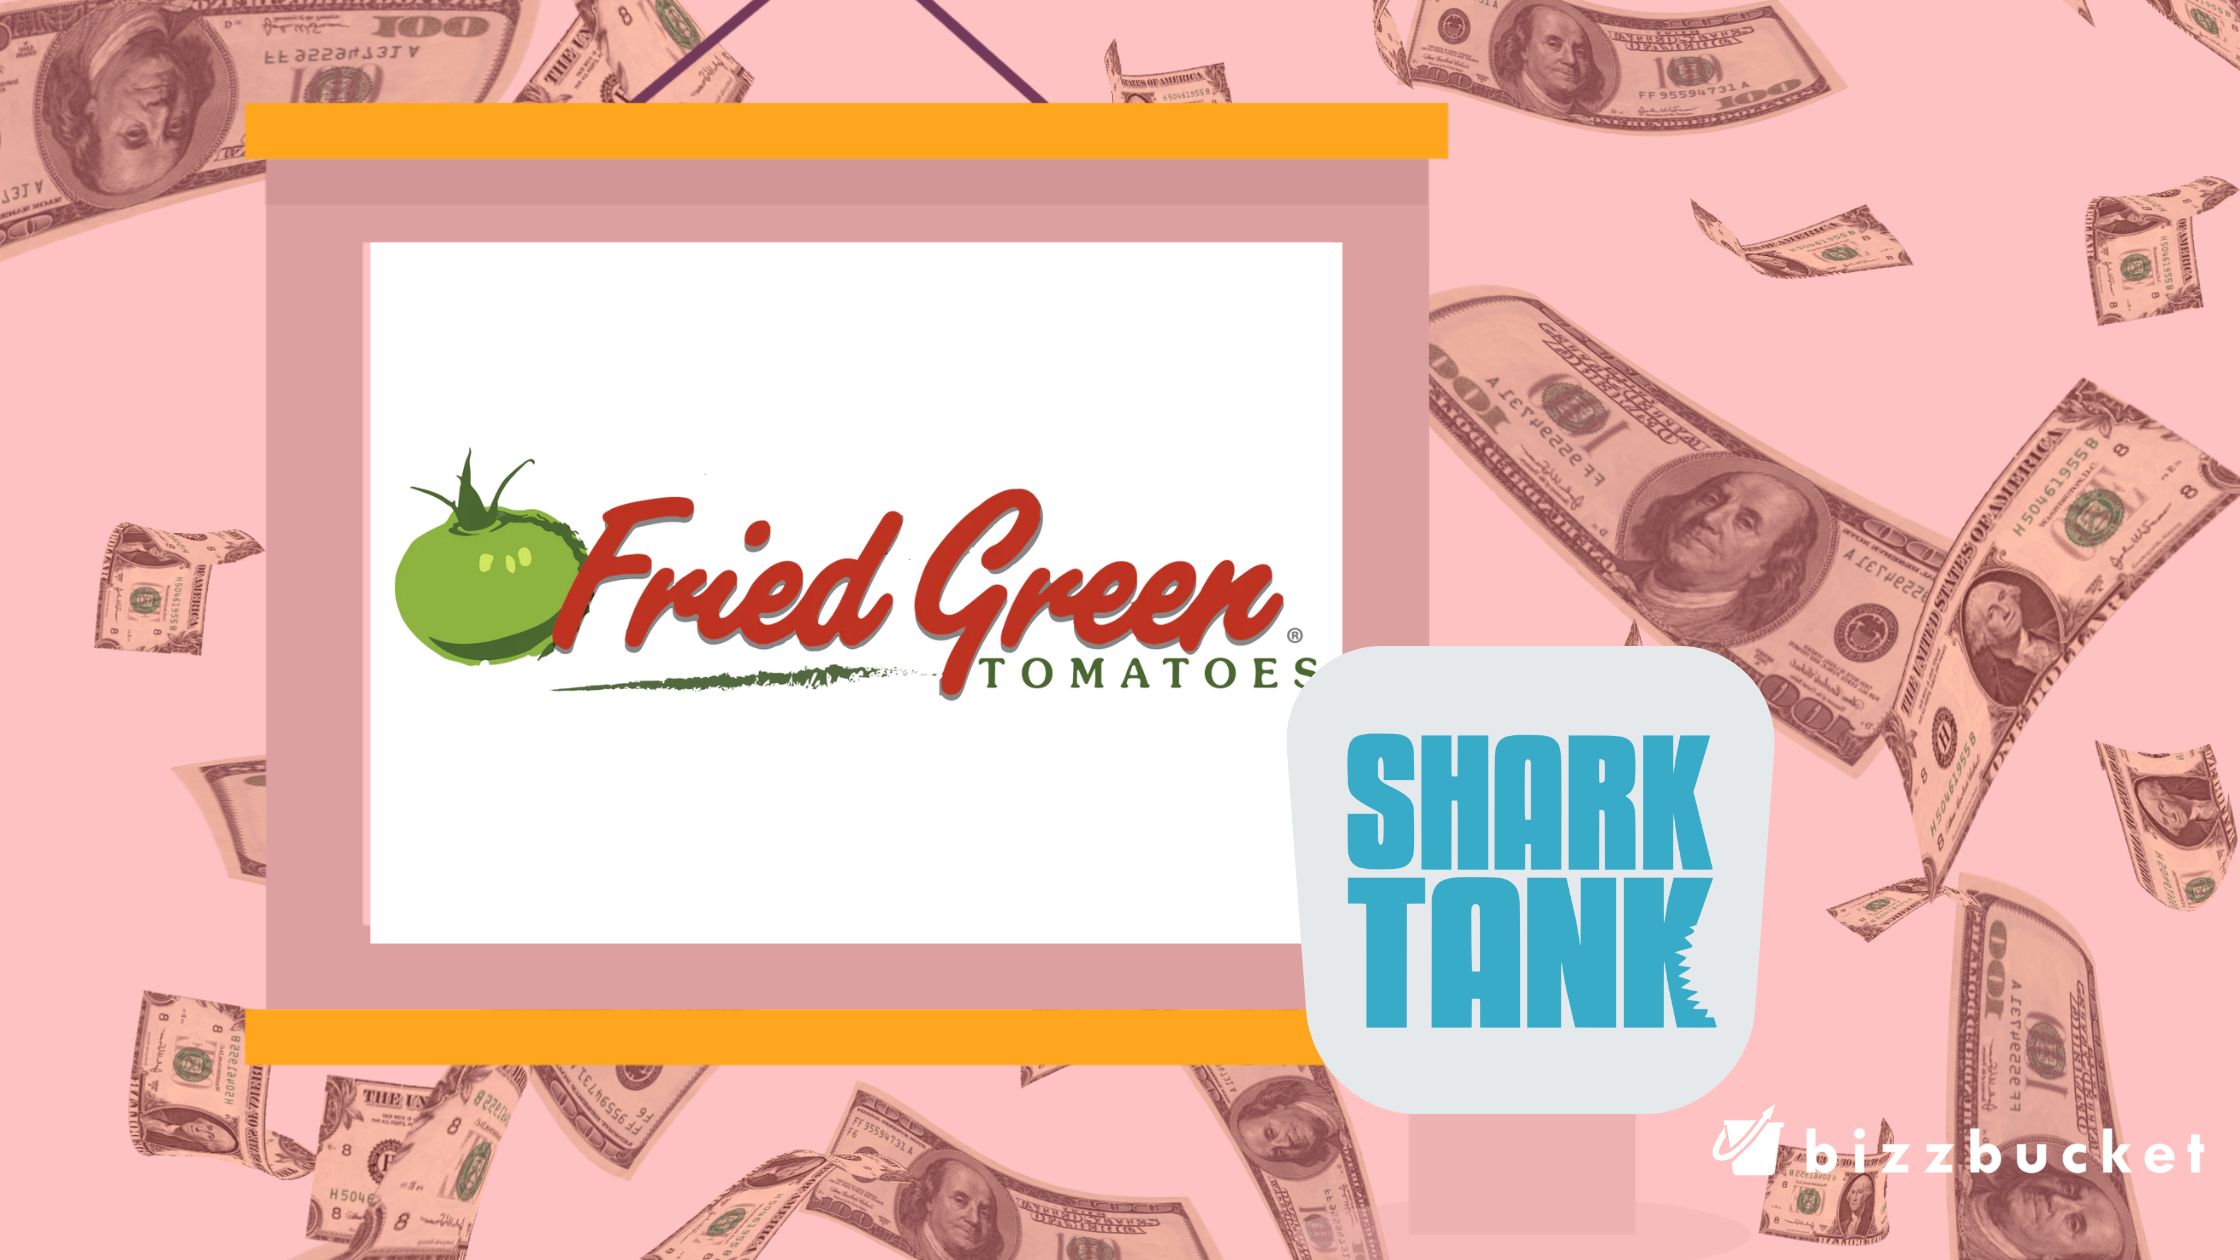 Fried Green Tomatoes shark tank